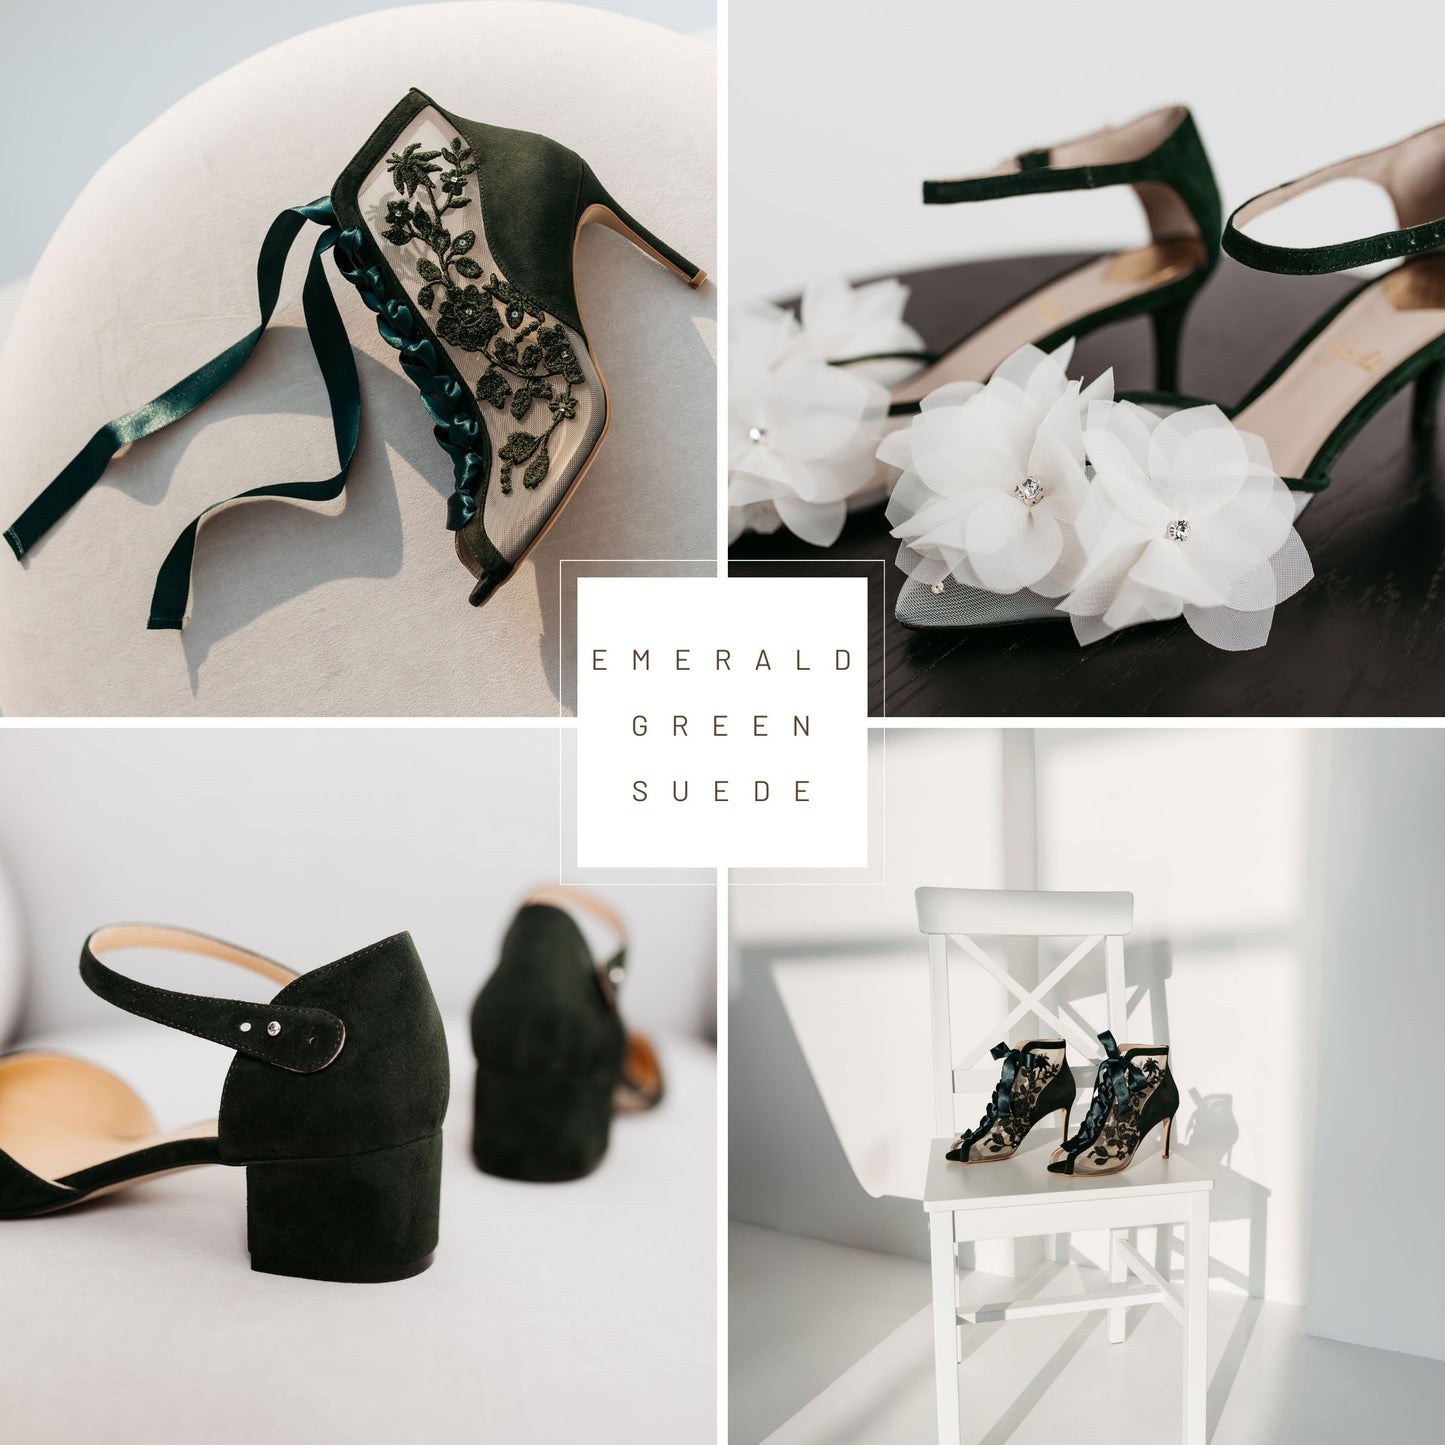 dreamy-wedding-shoes